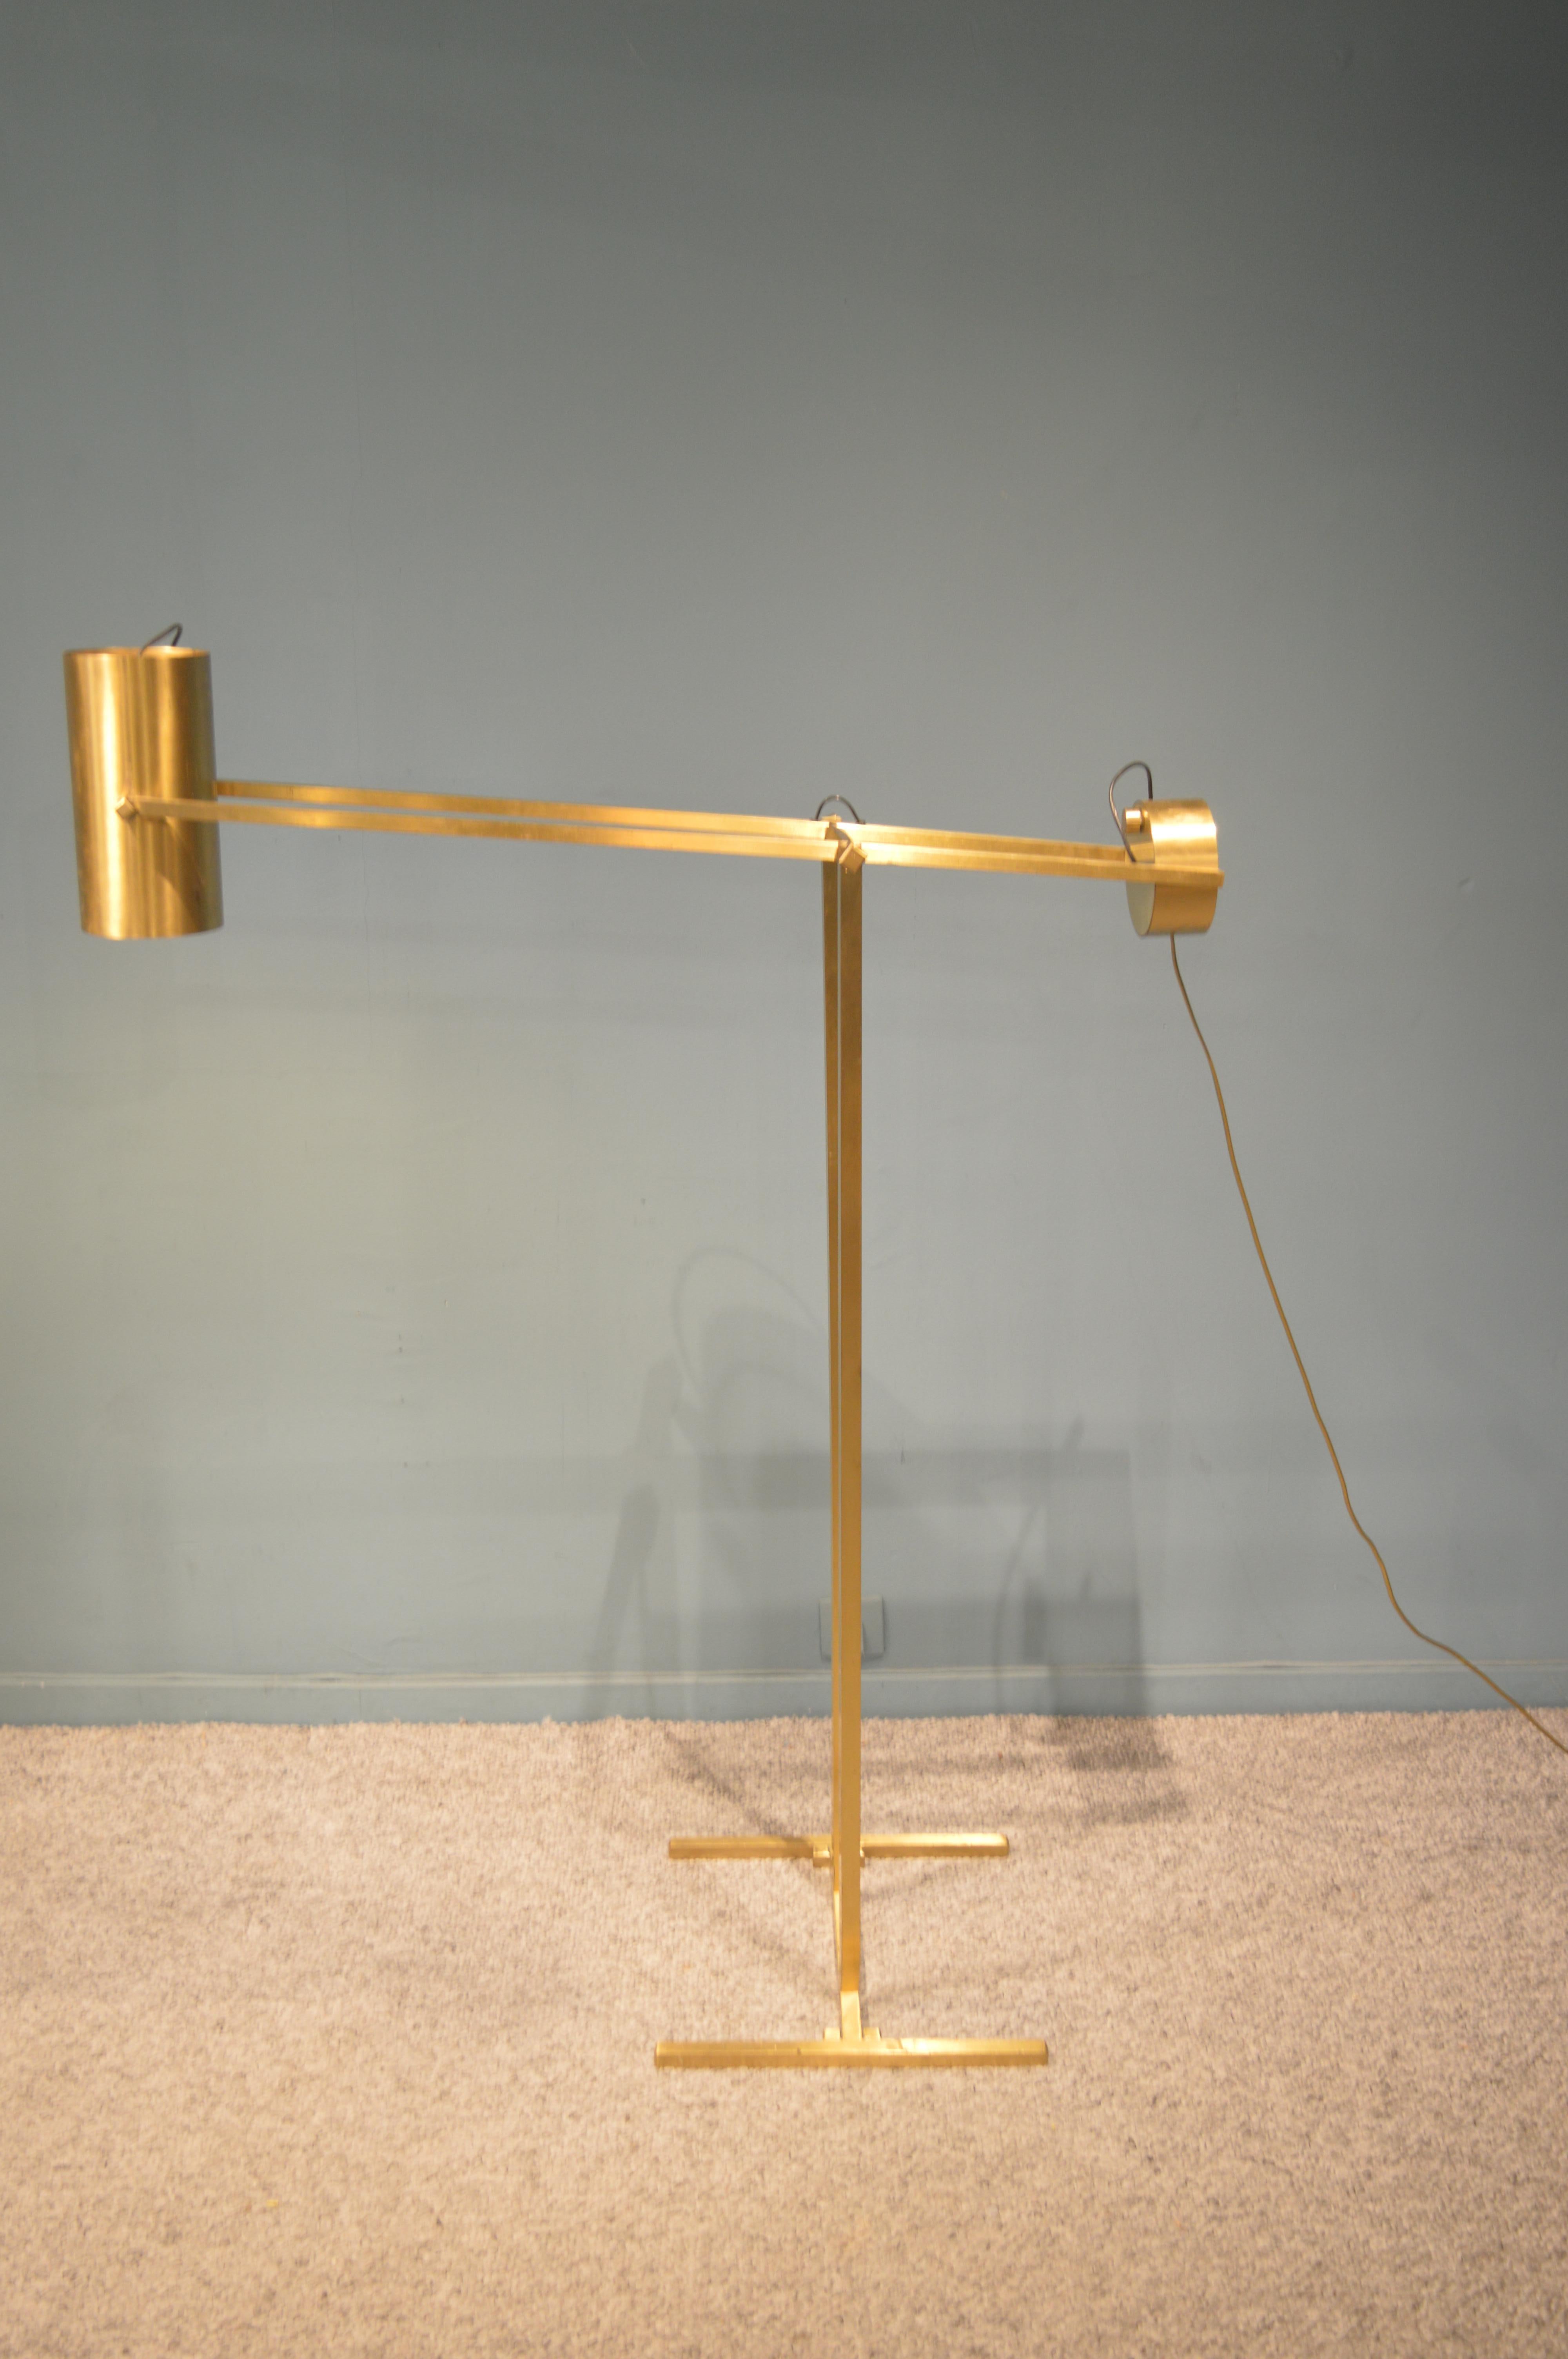 Counterweight floor lamp in brass by Goffredo Reggiani.
Original dimmer on the counterweight.
Italian work, circa 1960.